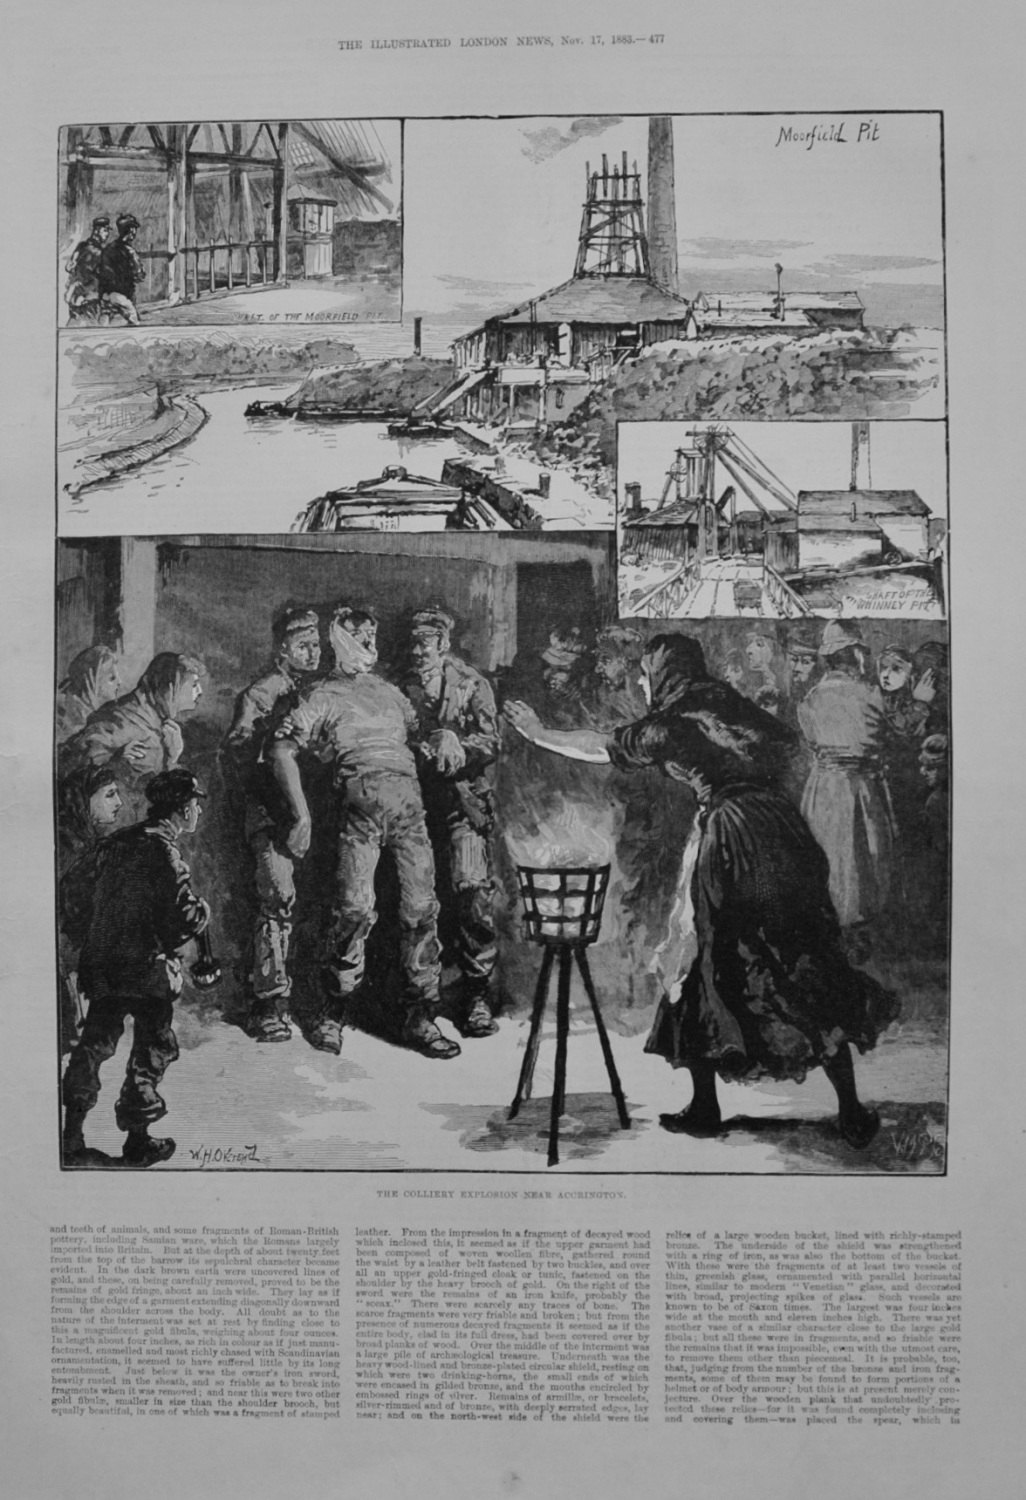 Accrington Colliery Explosion - 1883